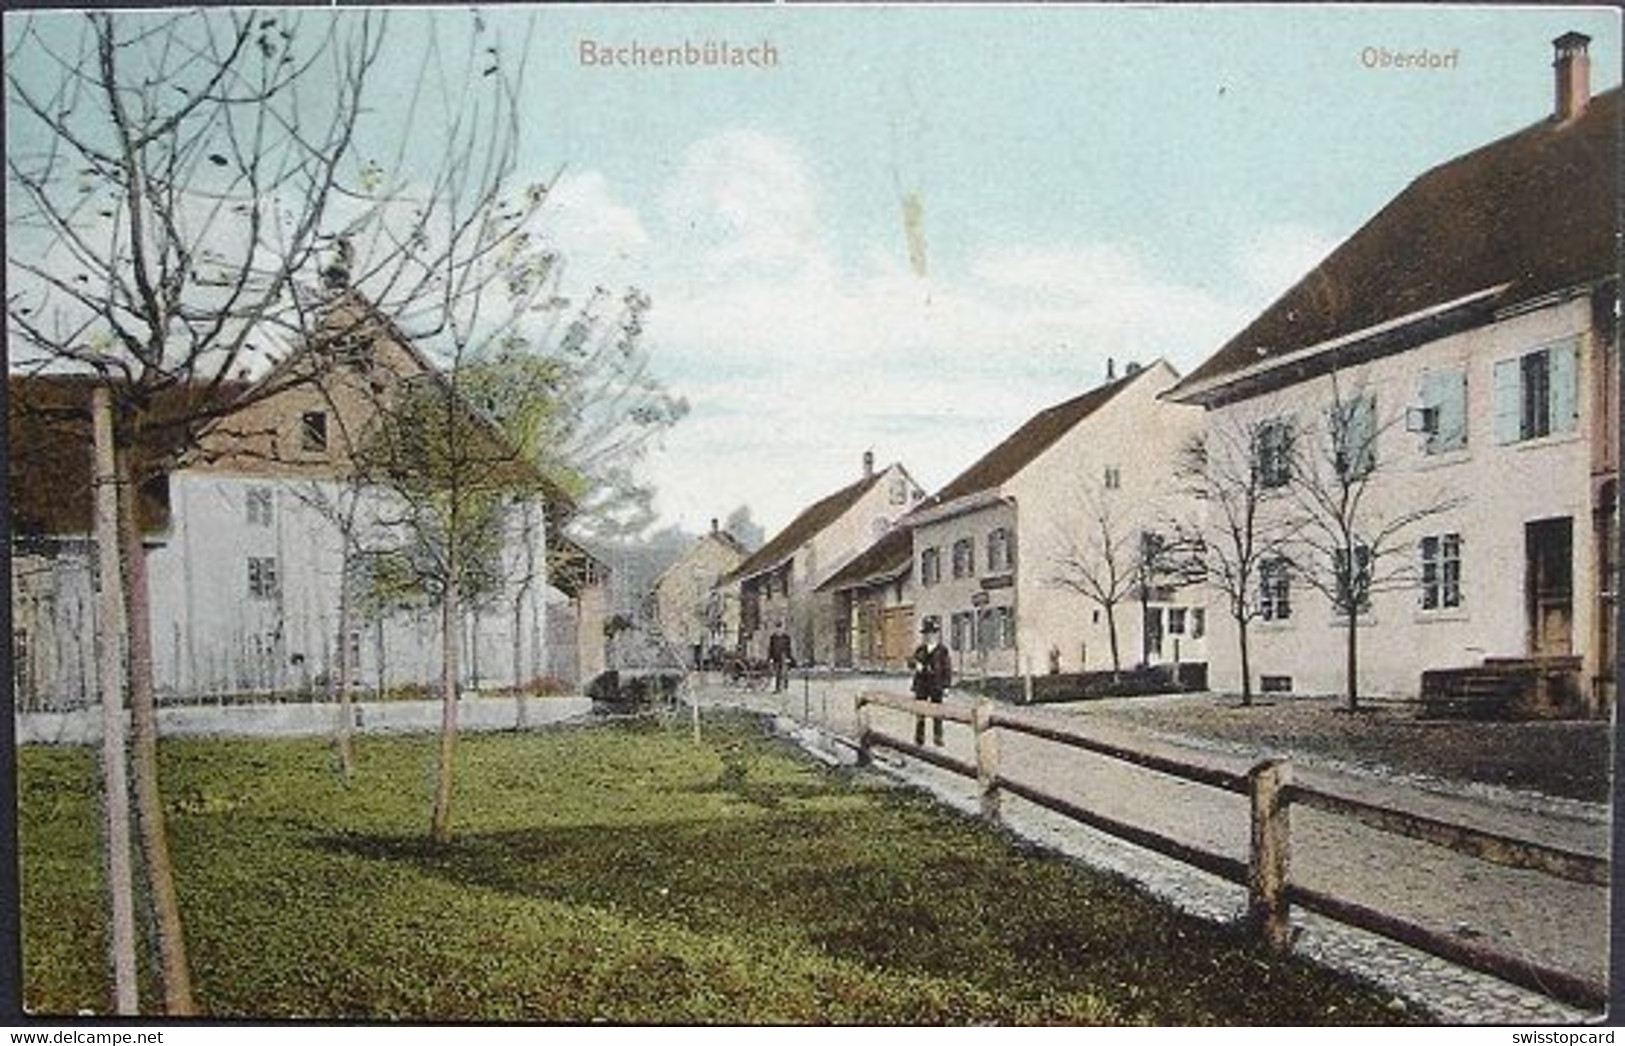 BACHENBÜLACH Oberdorf Gel. 1910 Feldpost V. Bülach N. Stäfa - Bülach